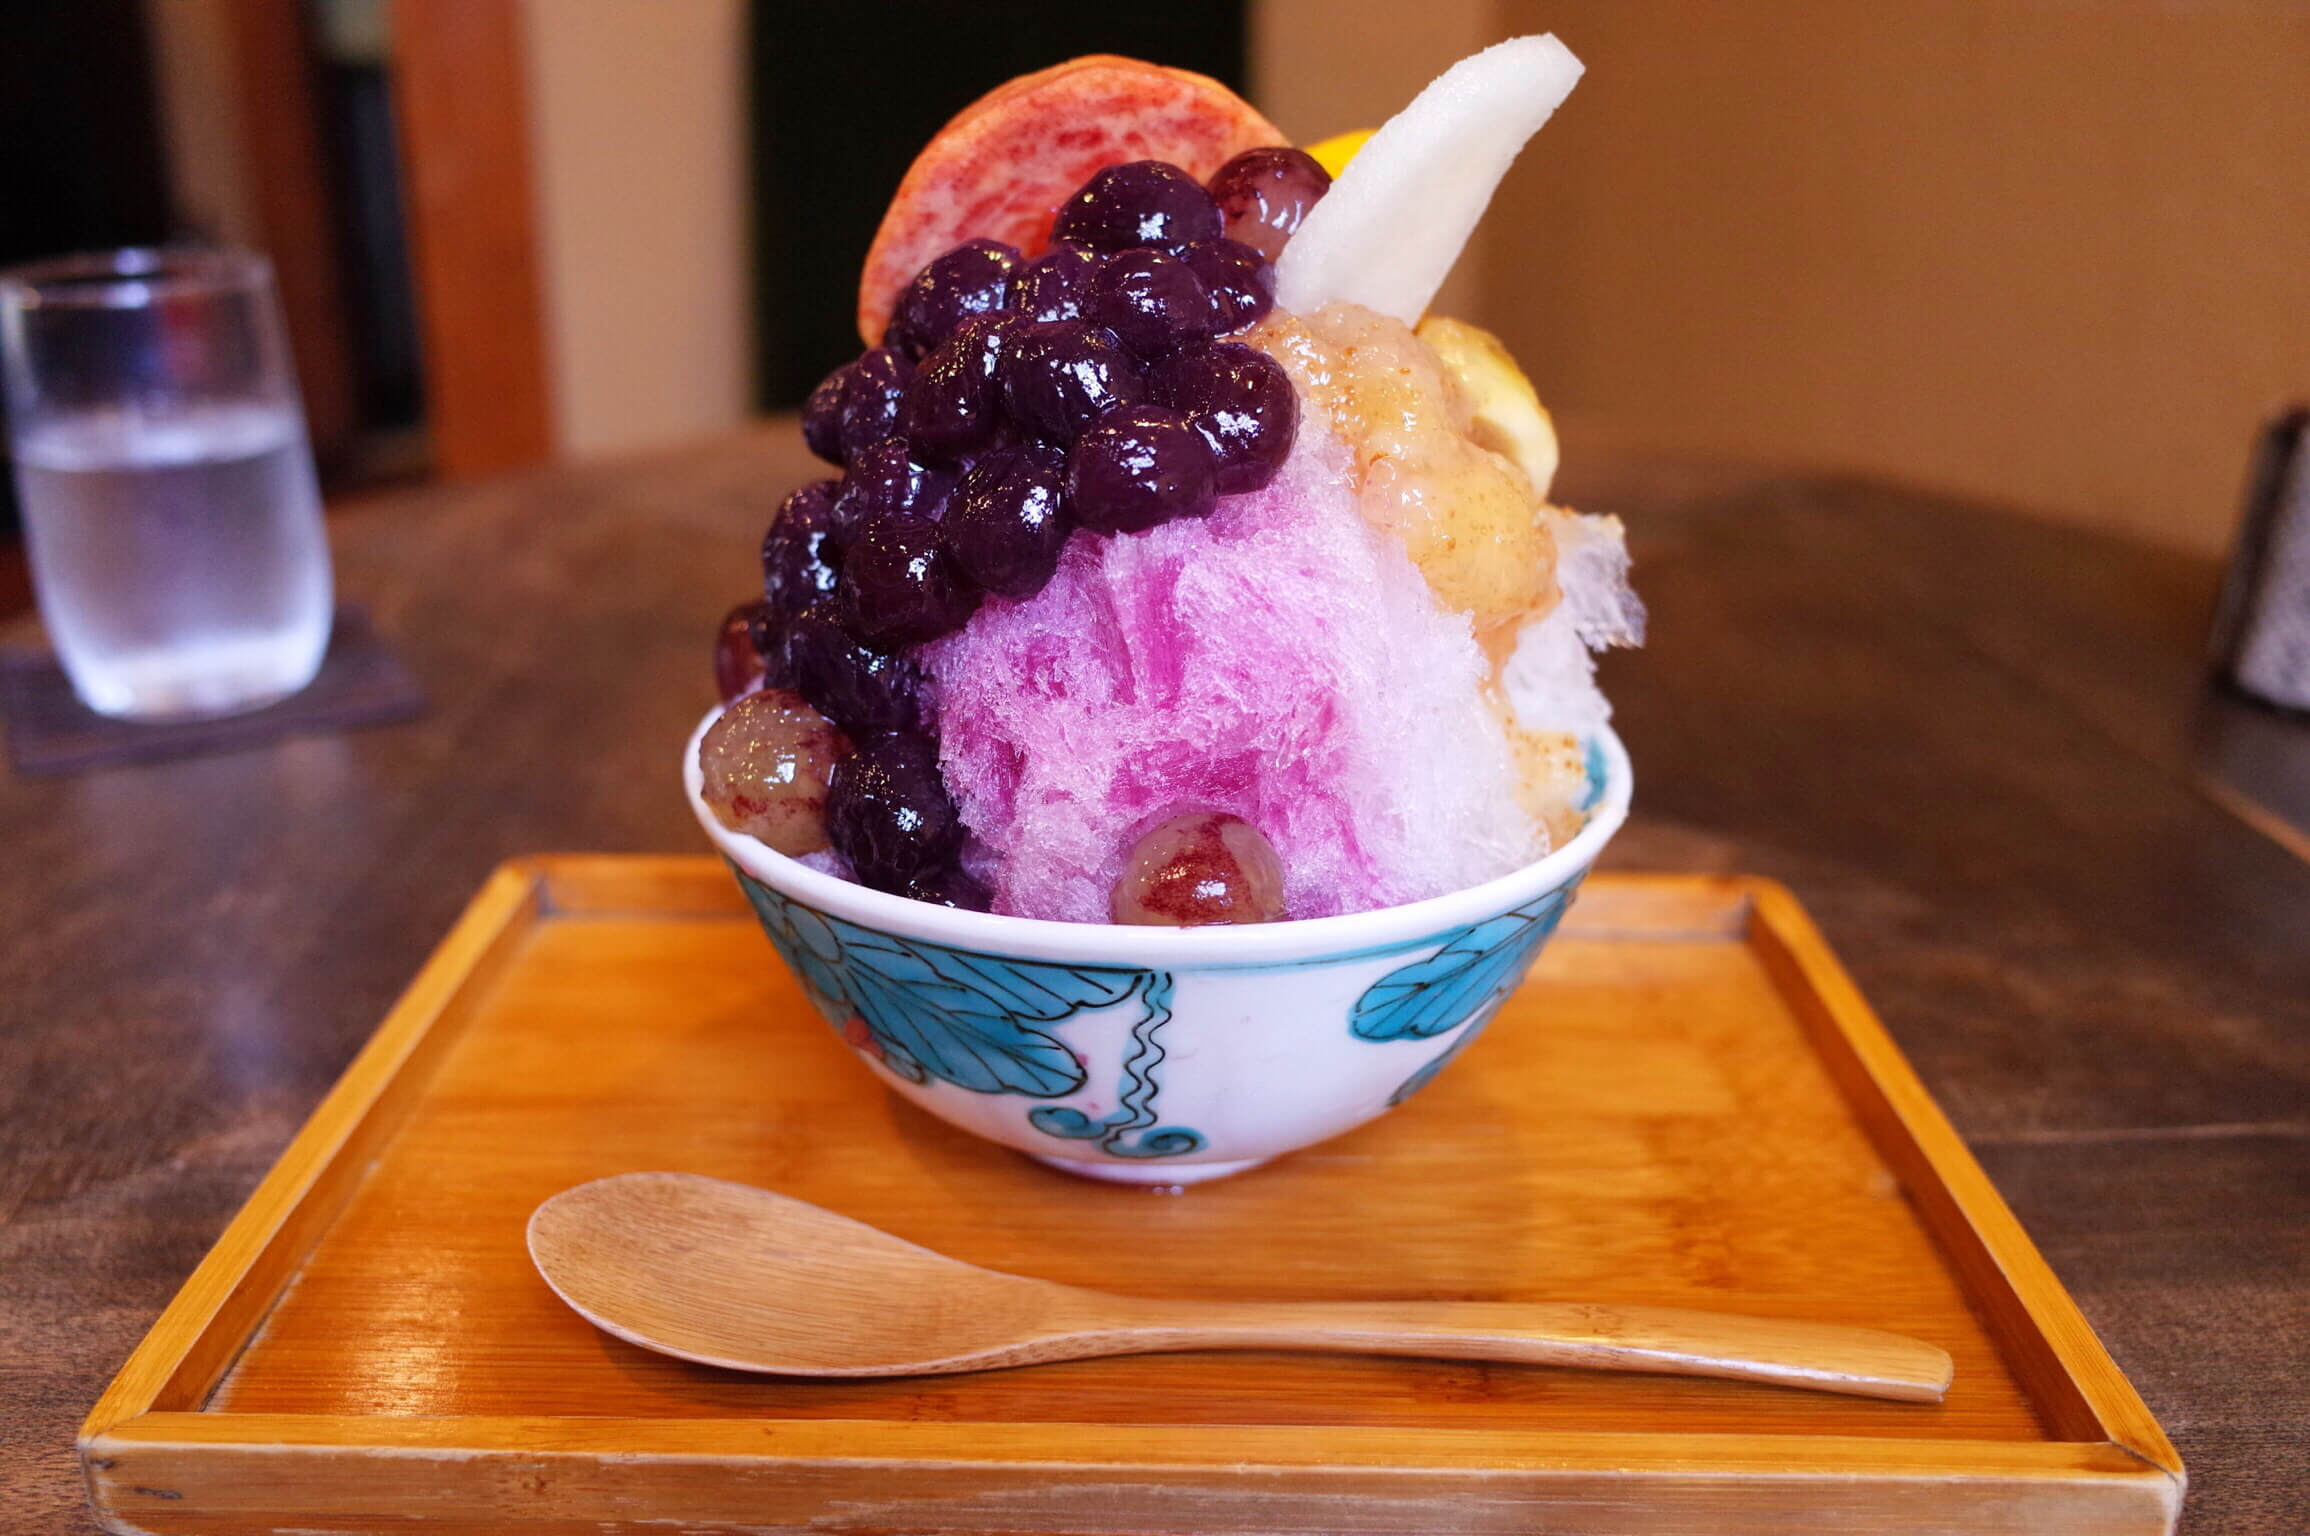 kotikaze(こちかぜ) 〜 大阪市玉造の雰囲気のいい和風カフェで果物たっぷりのかき氷を堪能！